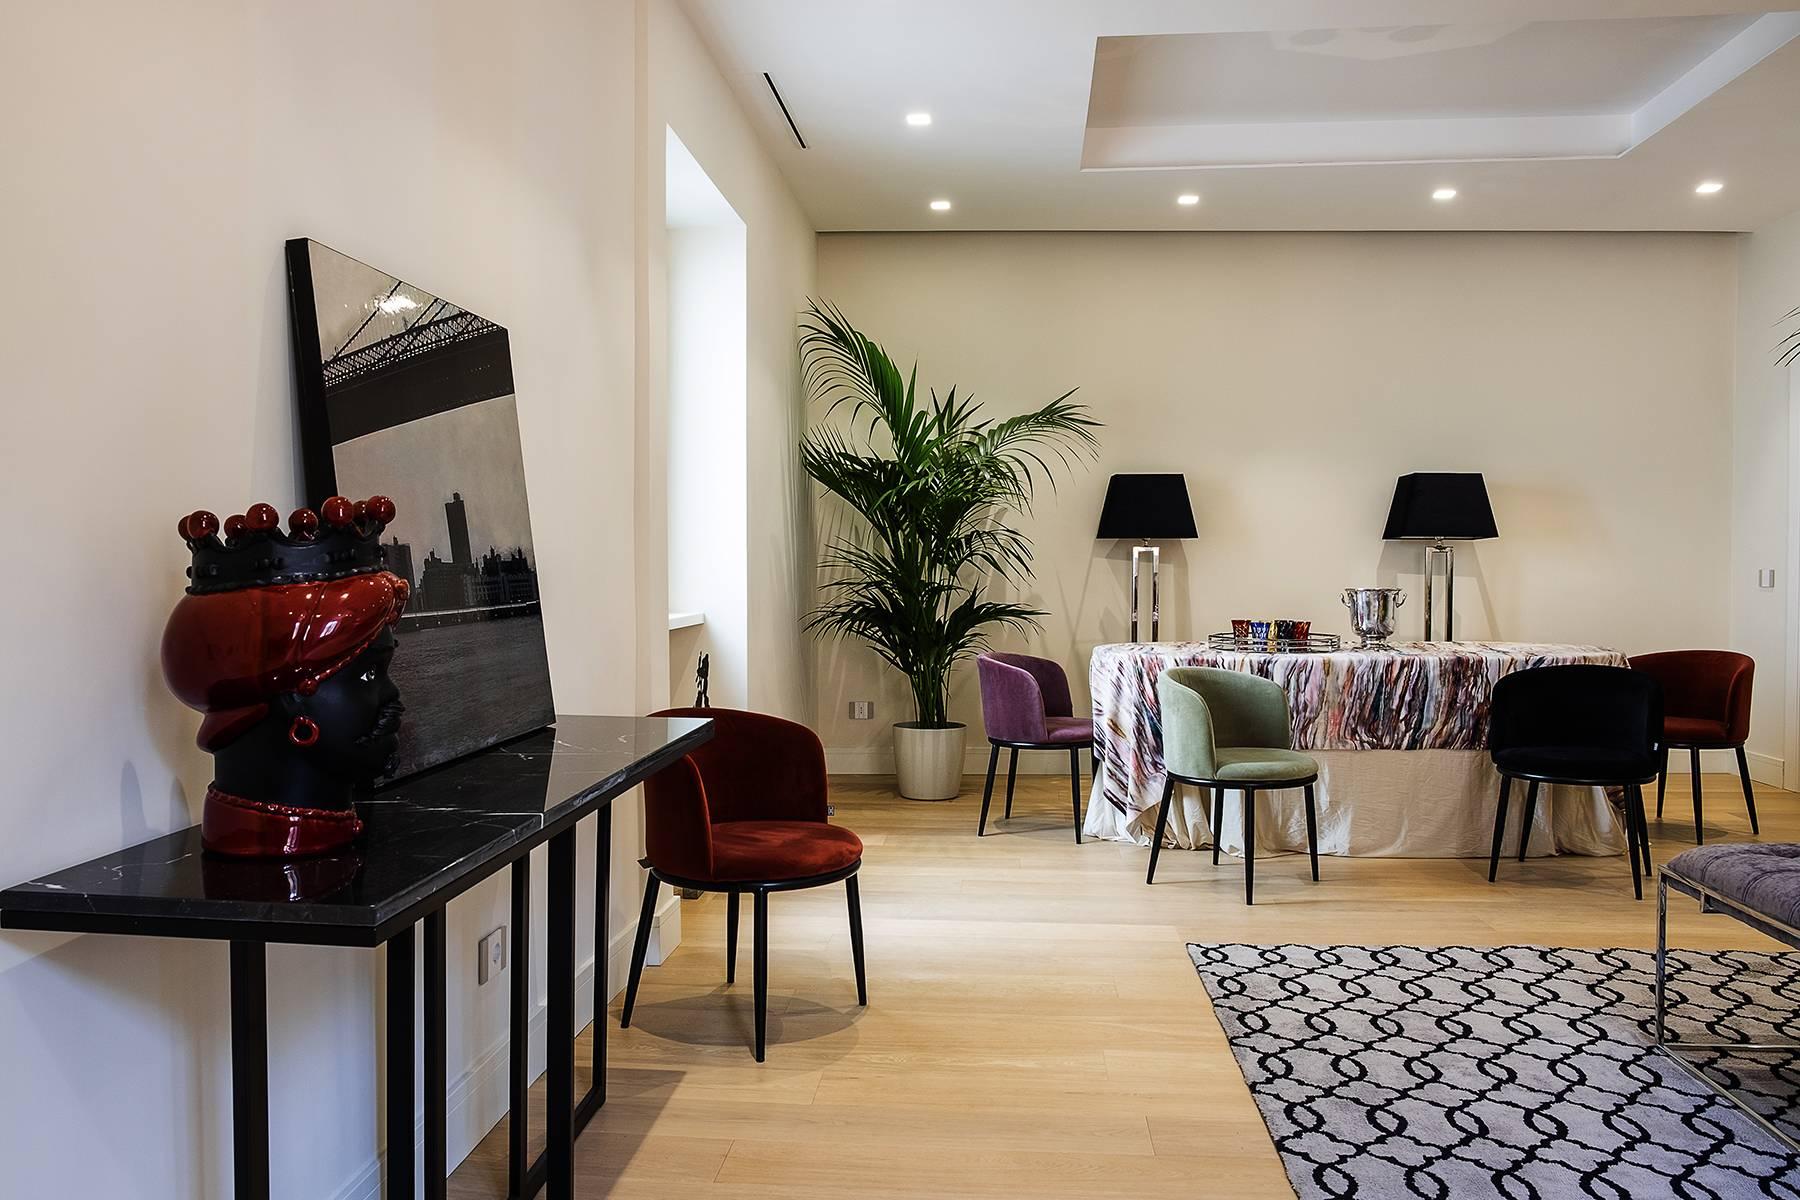 Spanish Steps luxury turnkey apartment - 3